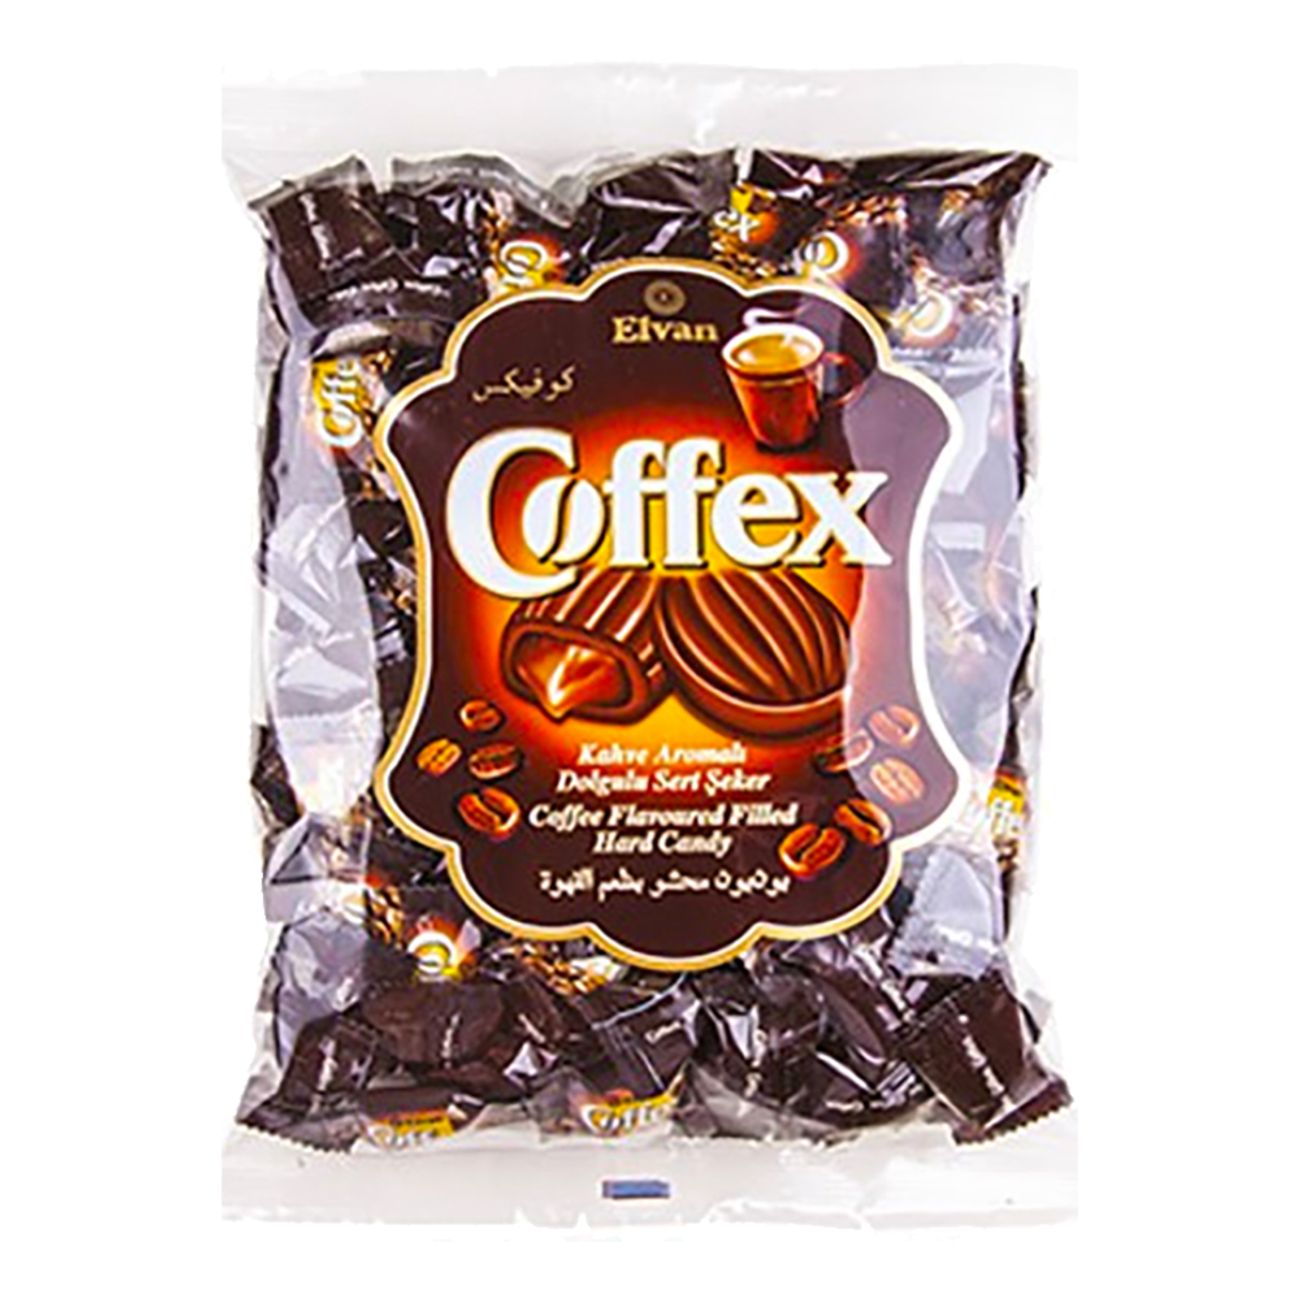 coffex-kaffechoklad-storpack-82892-1